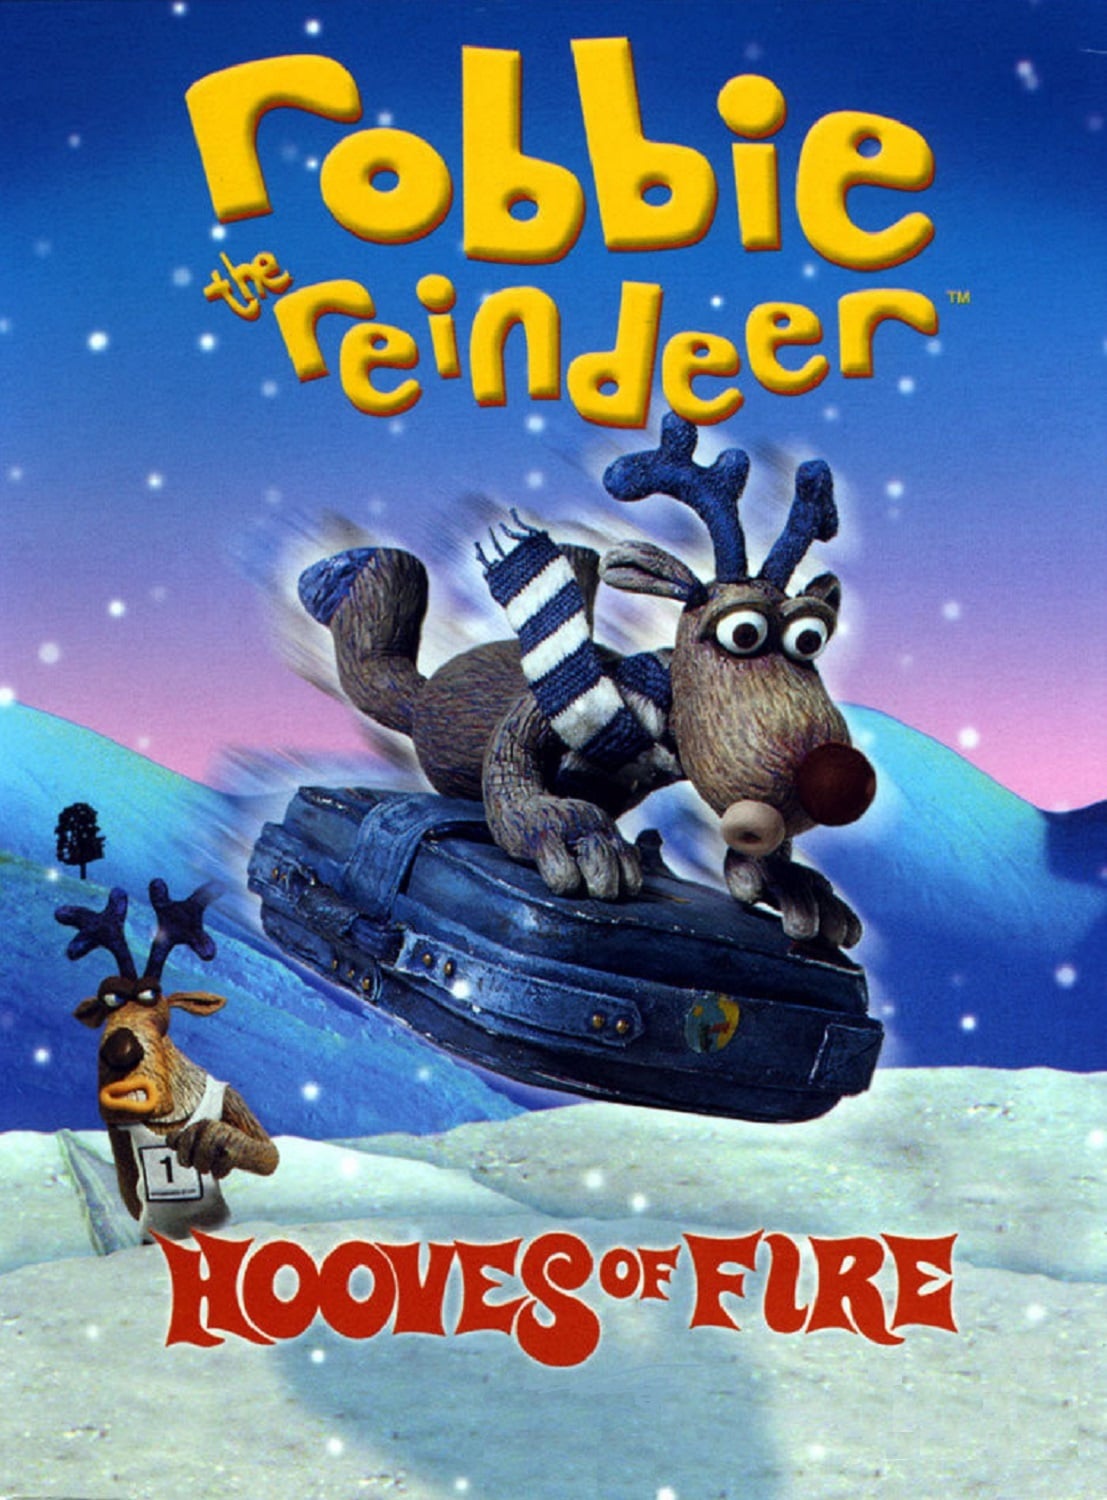 Plakat von "Robbie the Reindeer - Hooves of Fire"